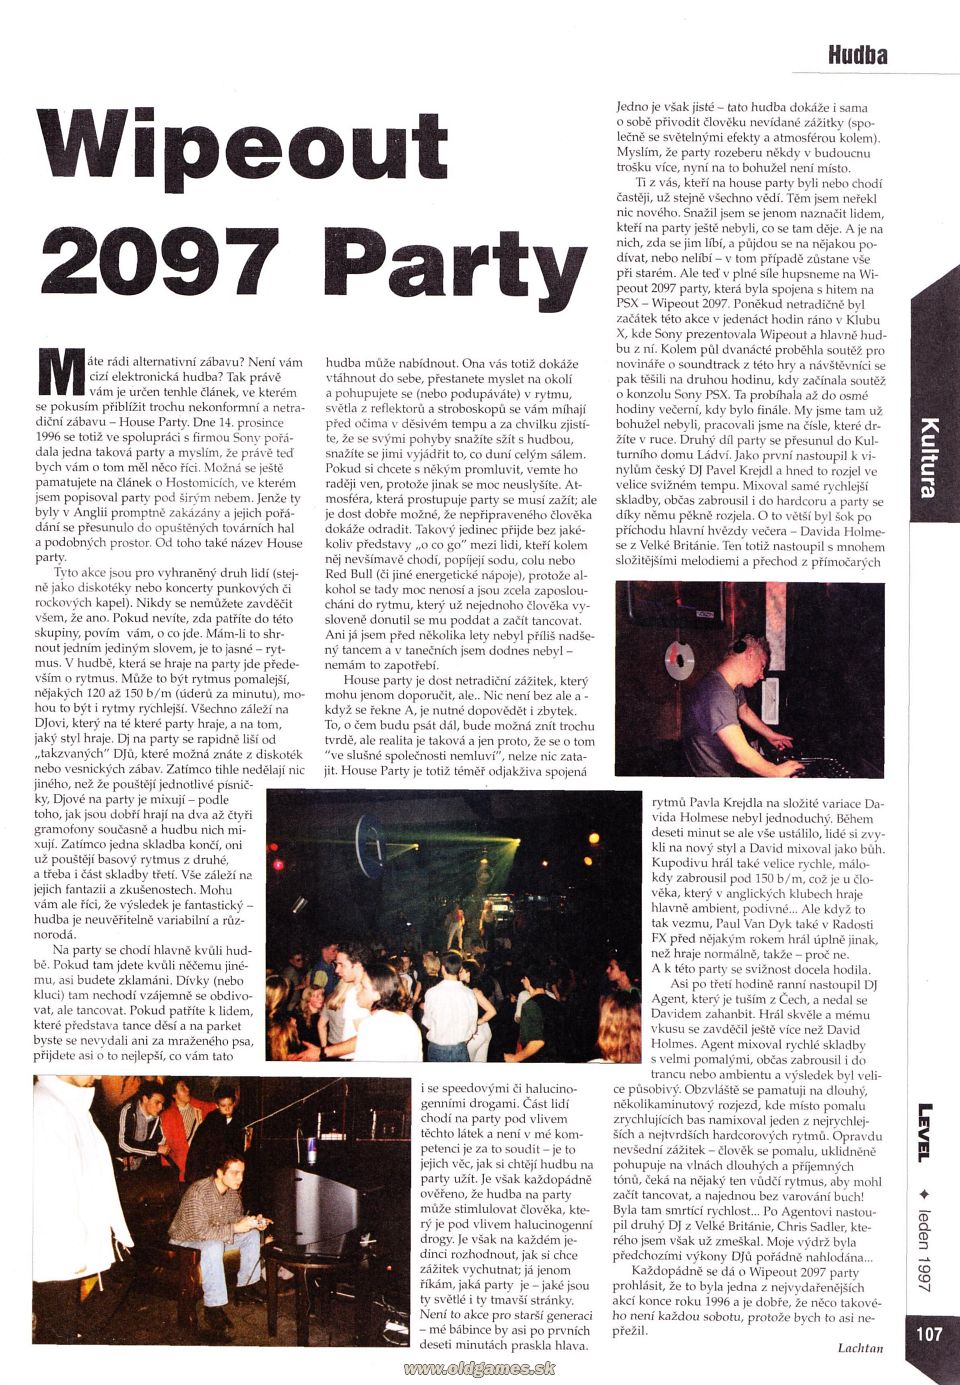 Reportáž: Wipeout 2097 Party